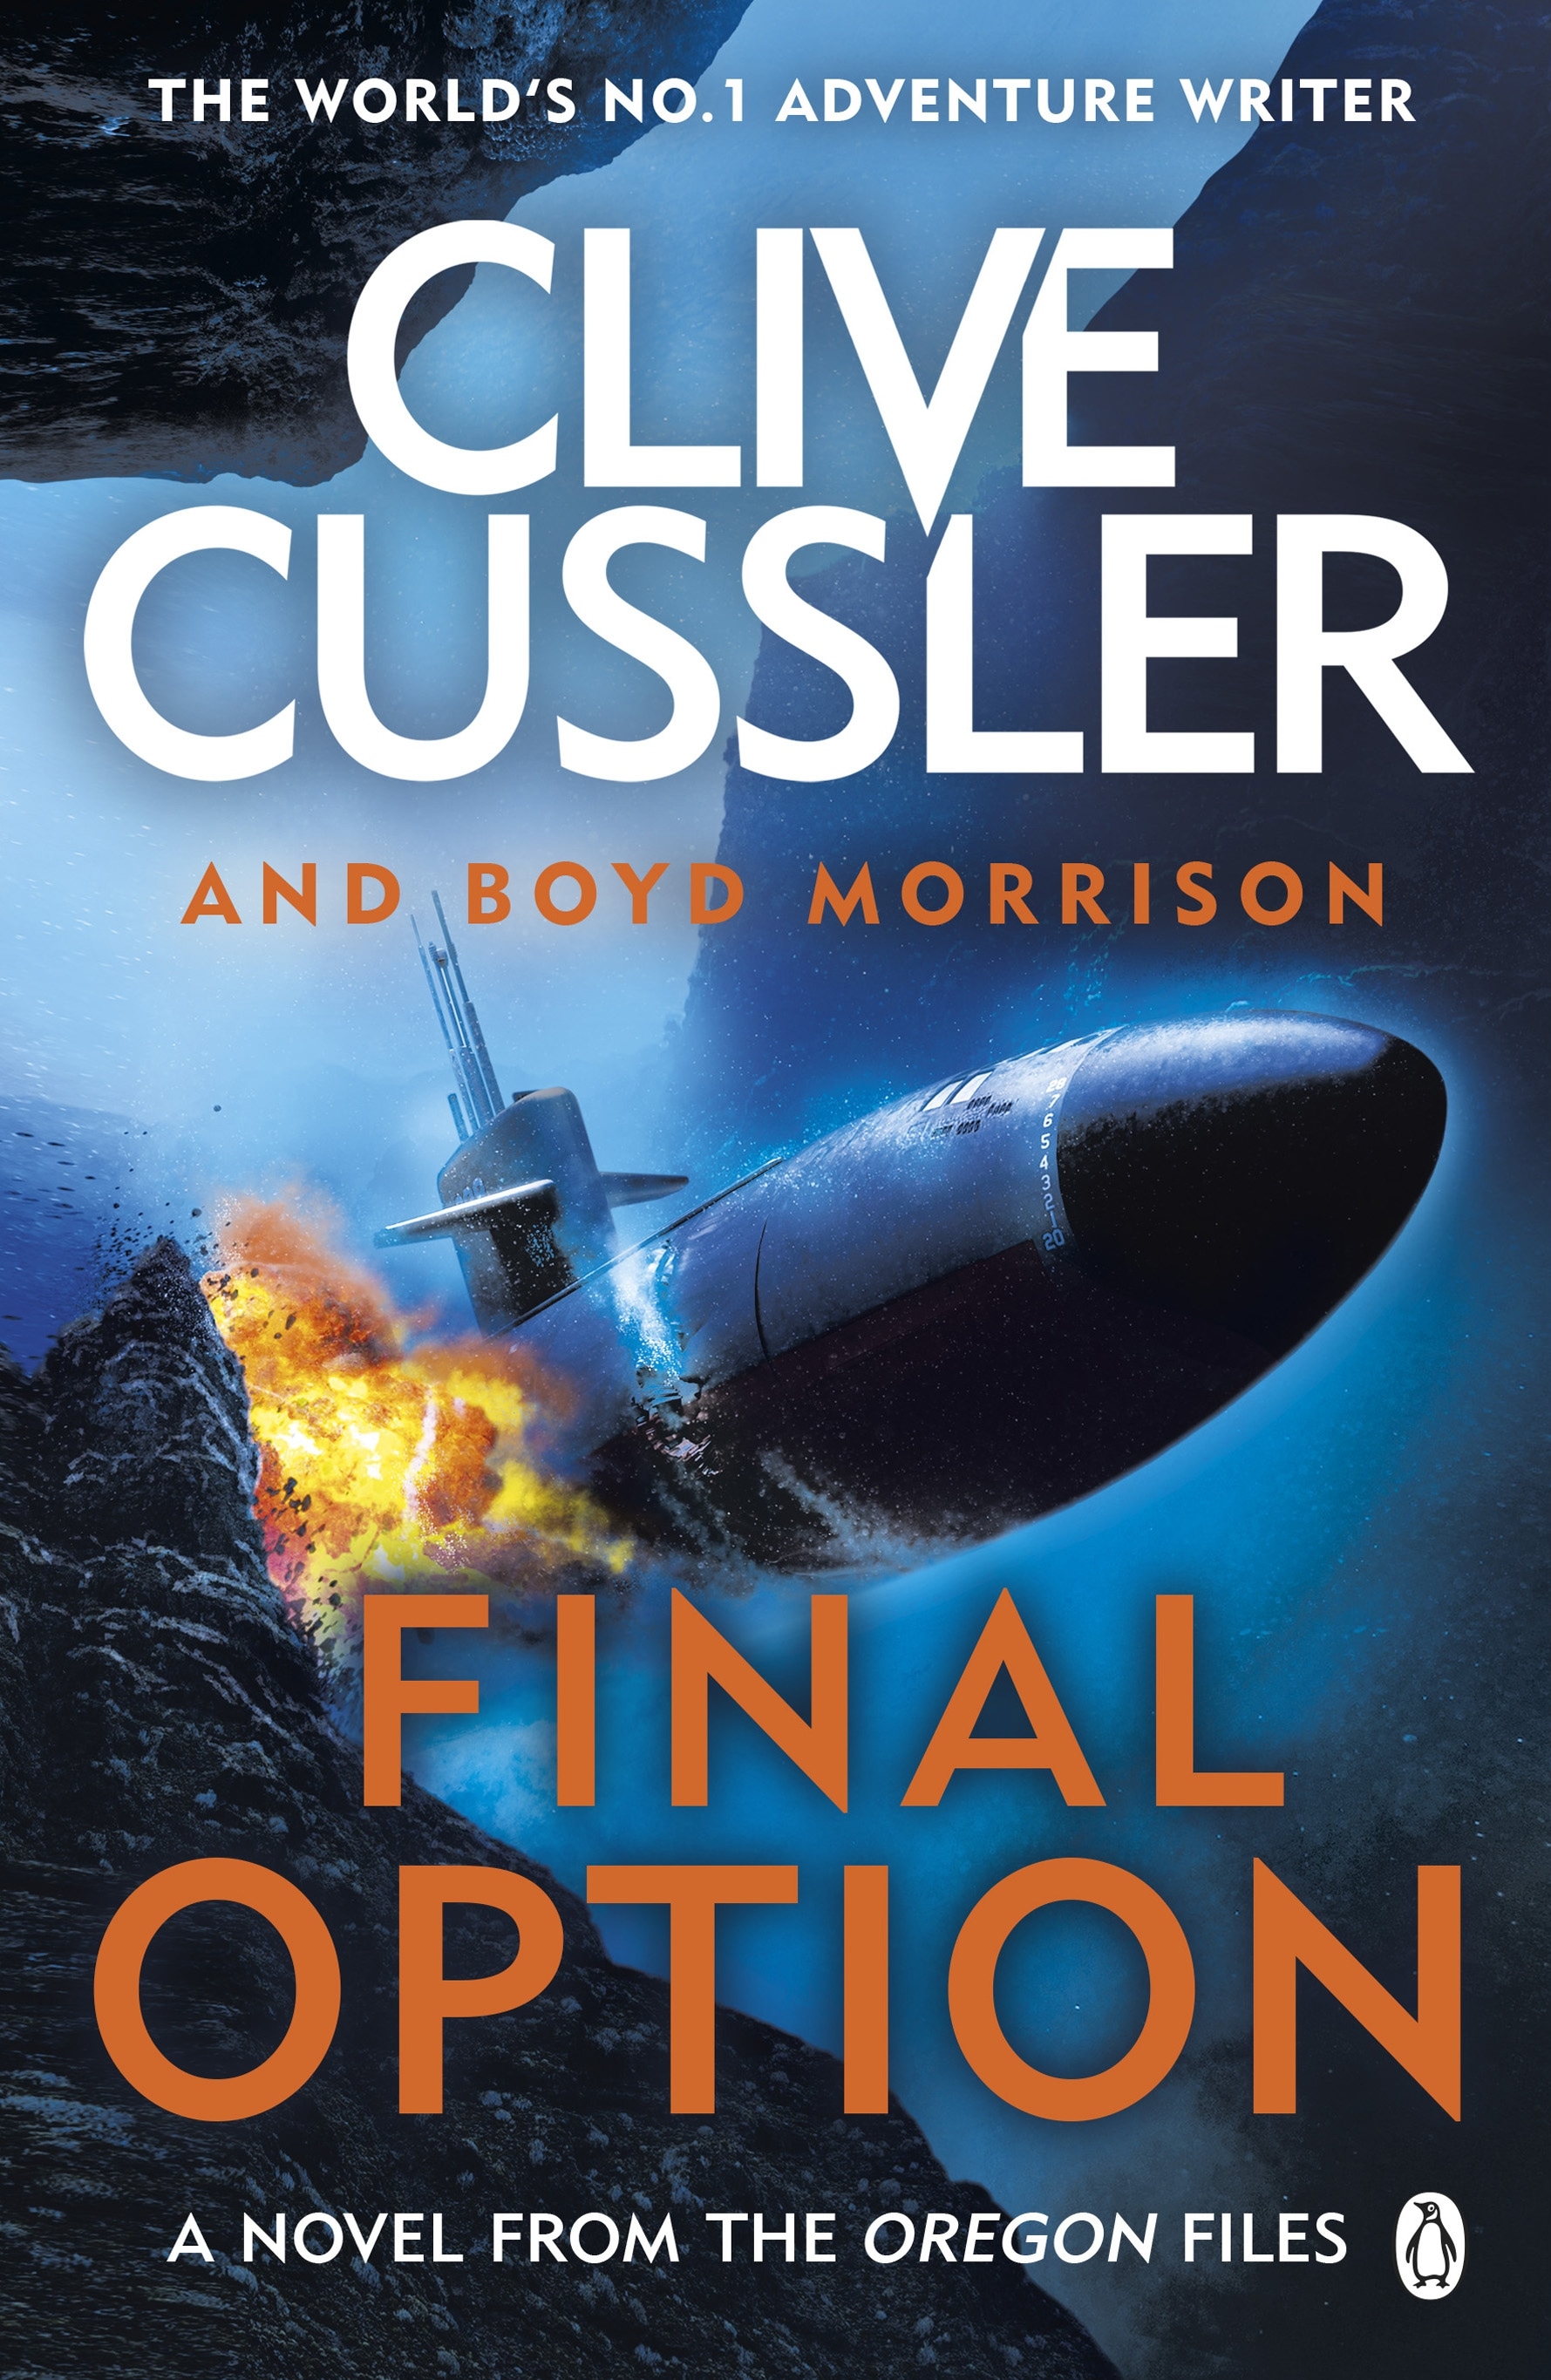 Book “Final Option” by Clive Cussler, Boyd Morrison — July 23, 2020